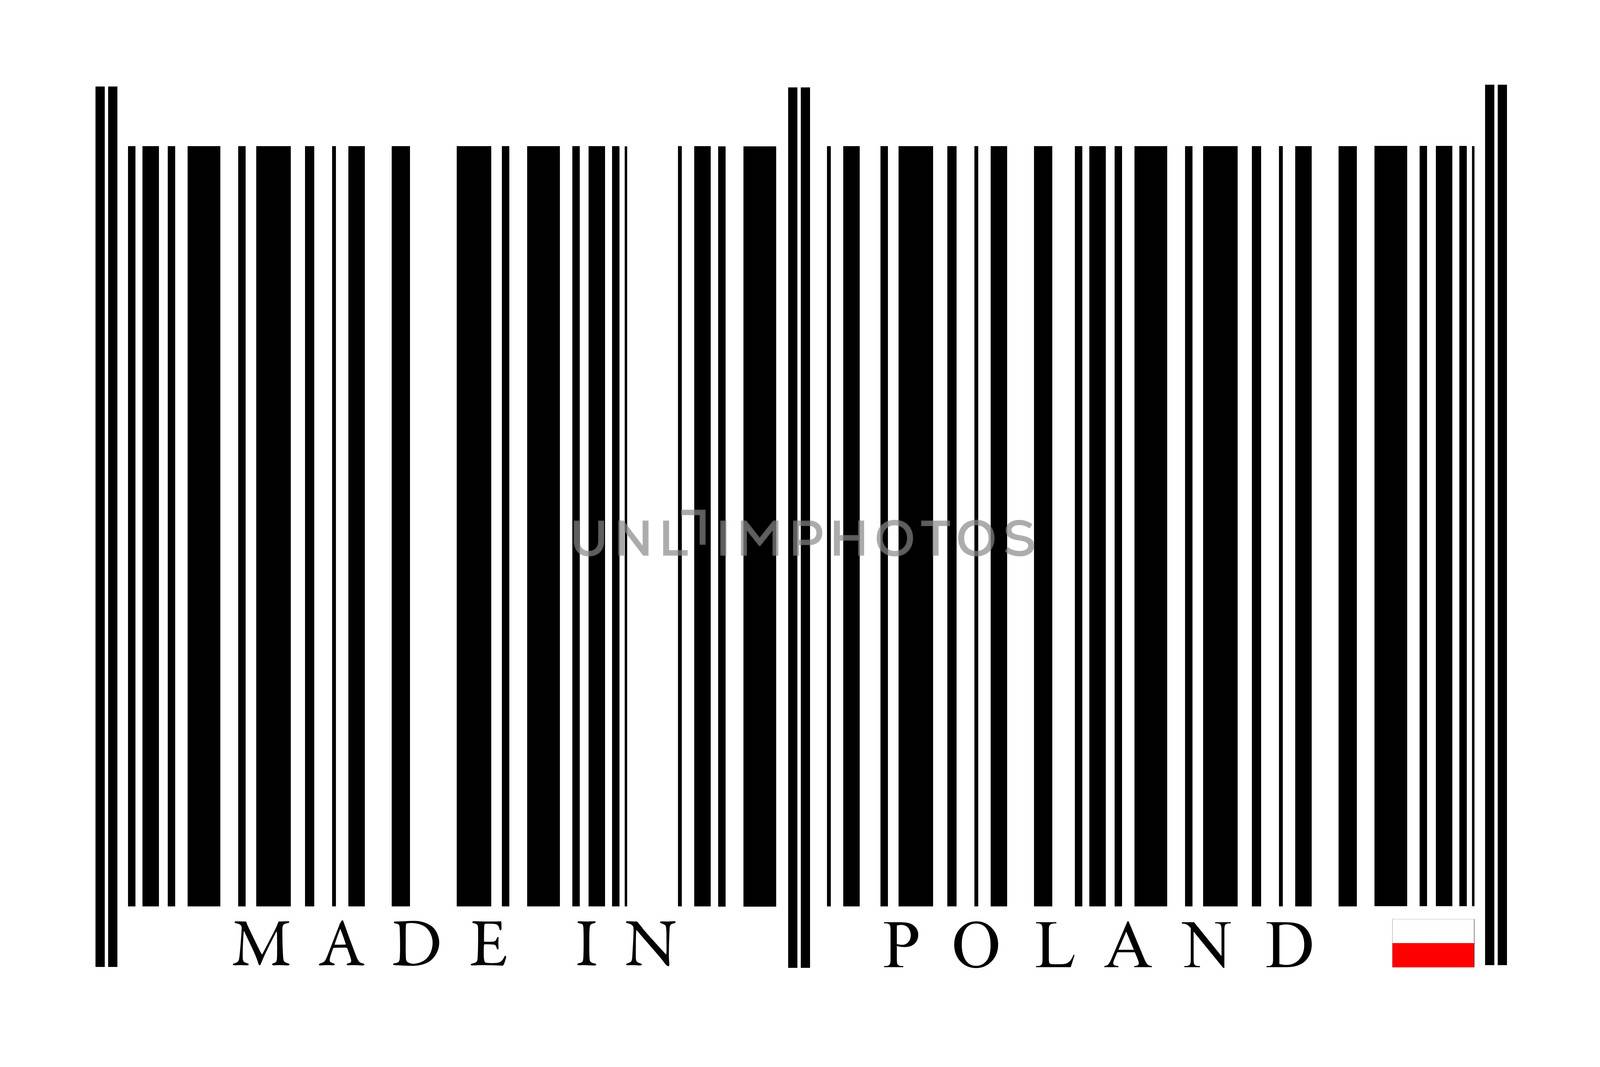 Poland Barcode by gemenacom